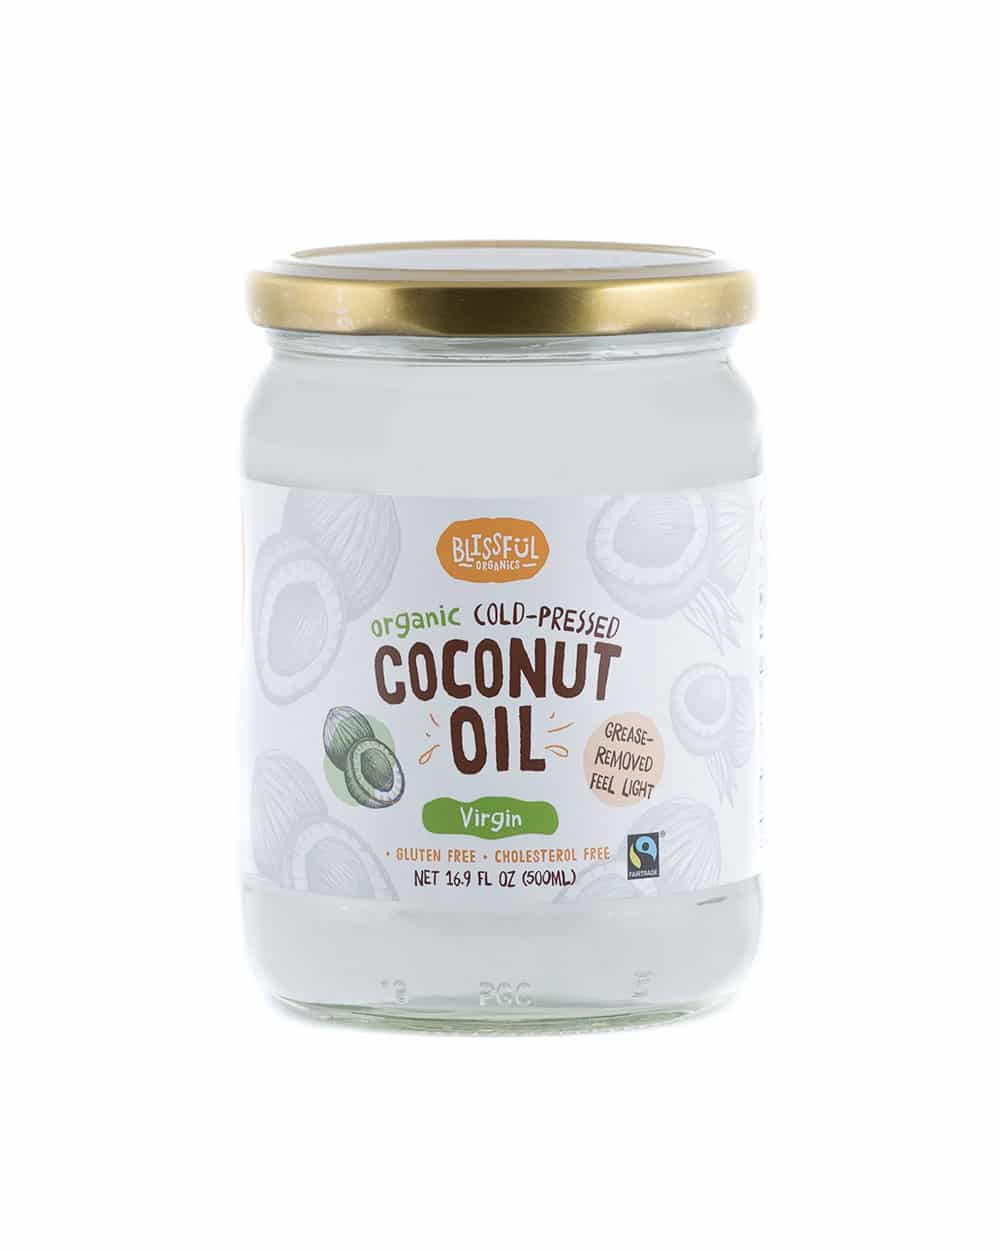 Blissful Cold Pressed Organic Virgin Coconut Oil